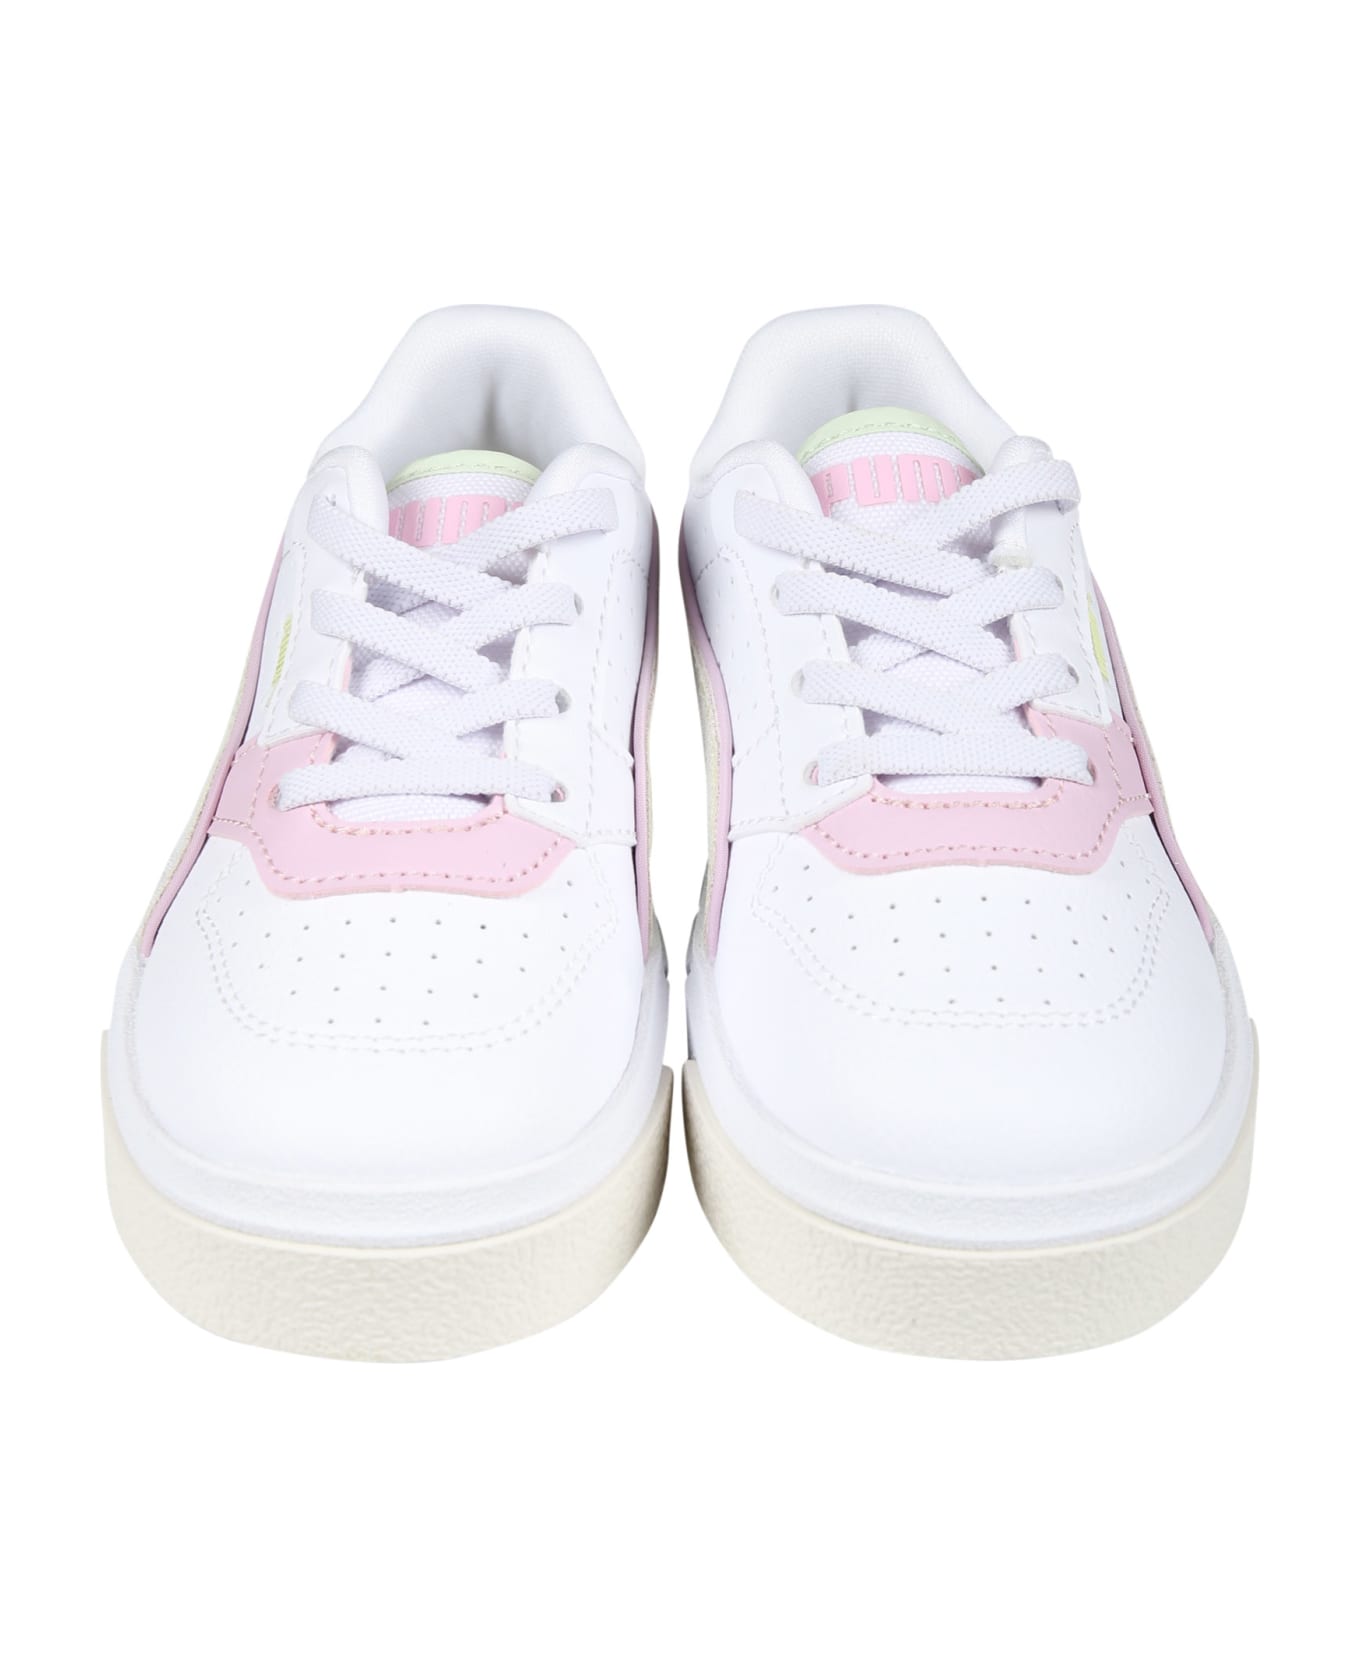 Puma Cali White Low Sneakers For Girl - White シューズ